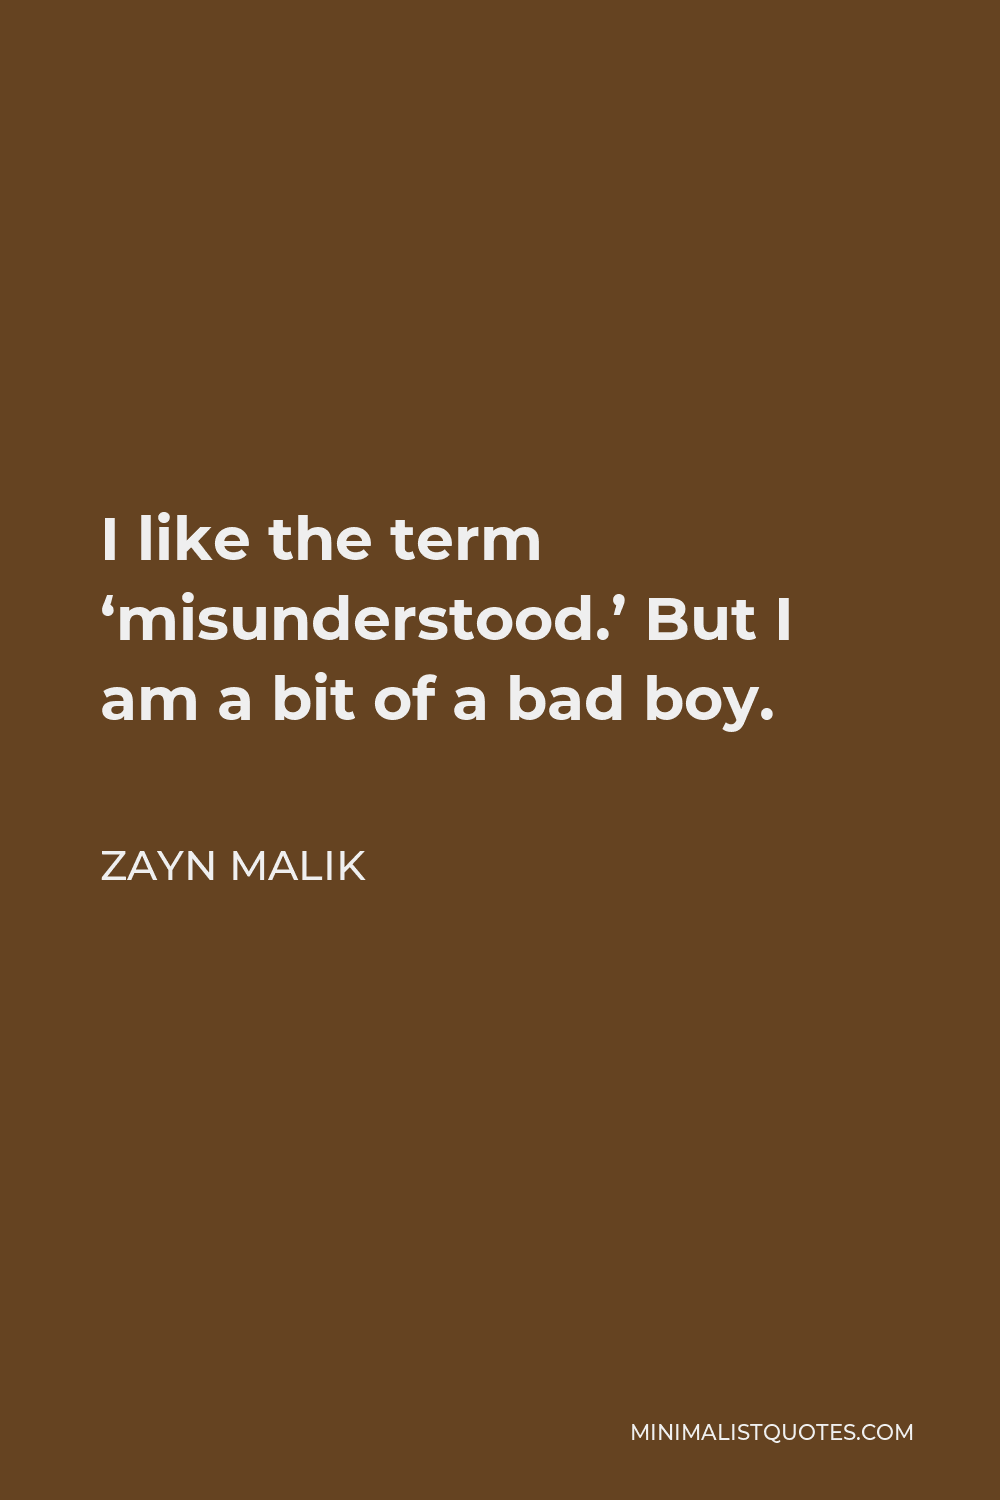 Zayn Malik Quote - I like the term ‘misunderstood.’ But I am a bit of a bad boy.